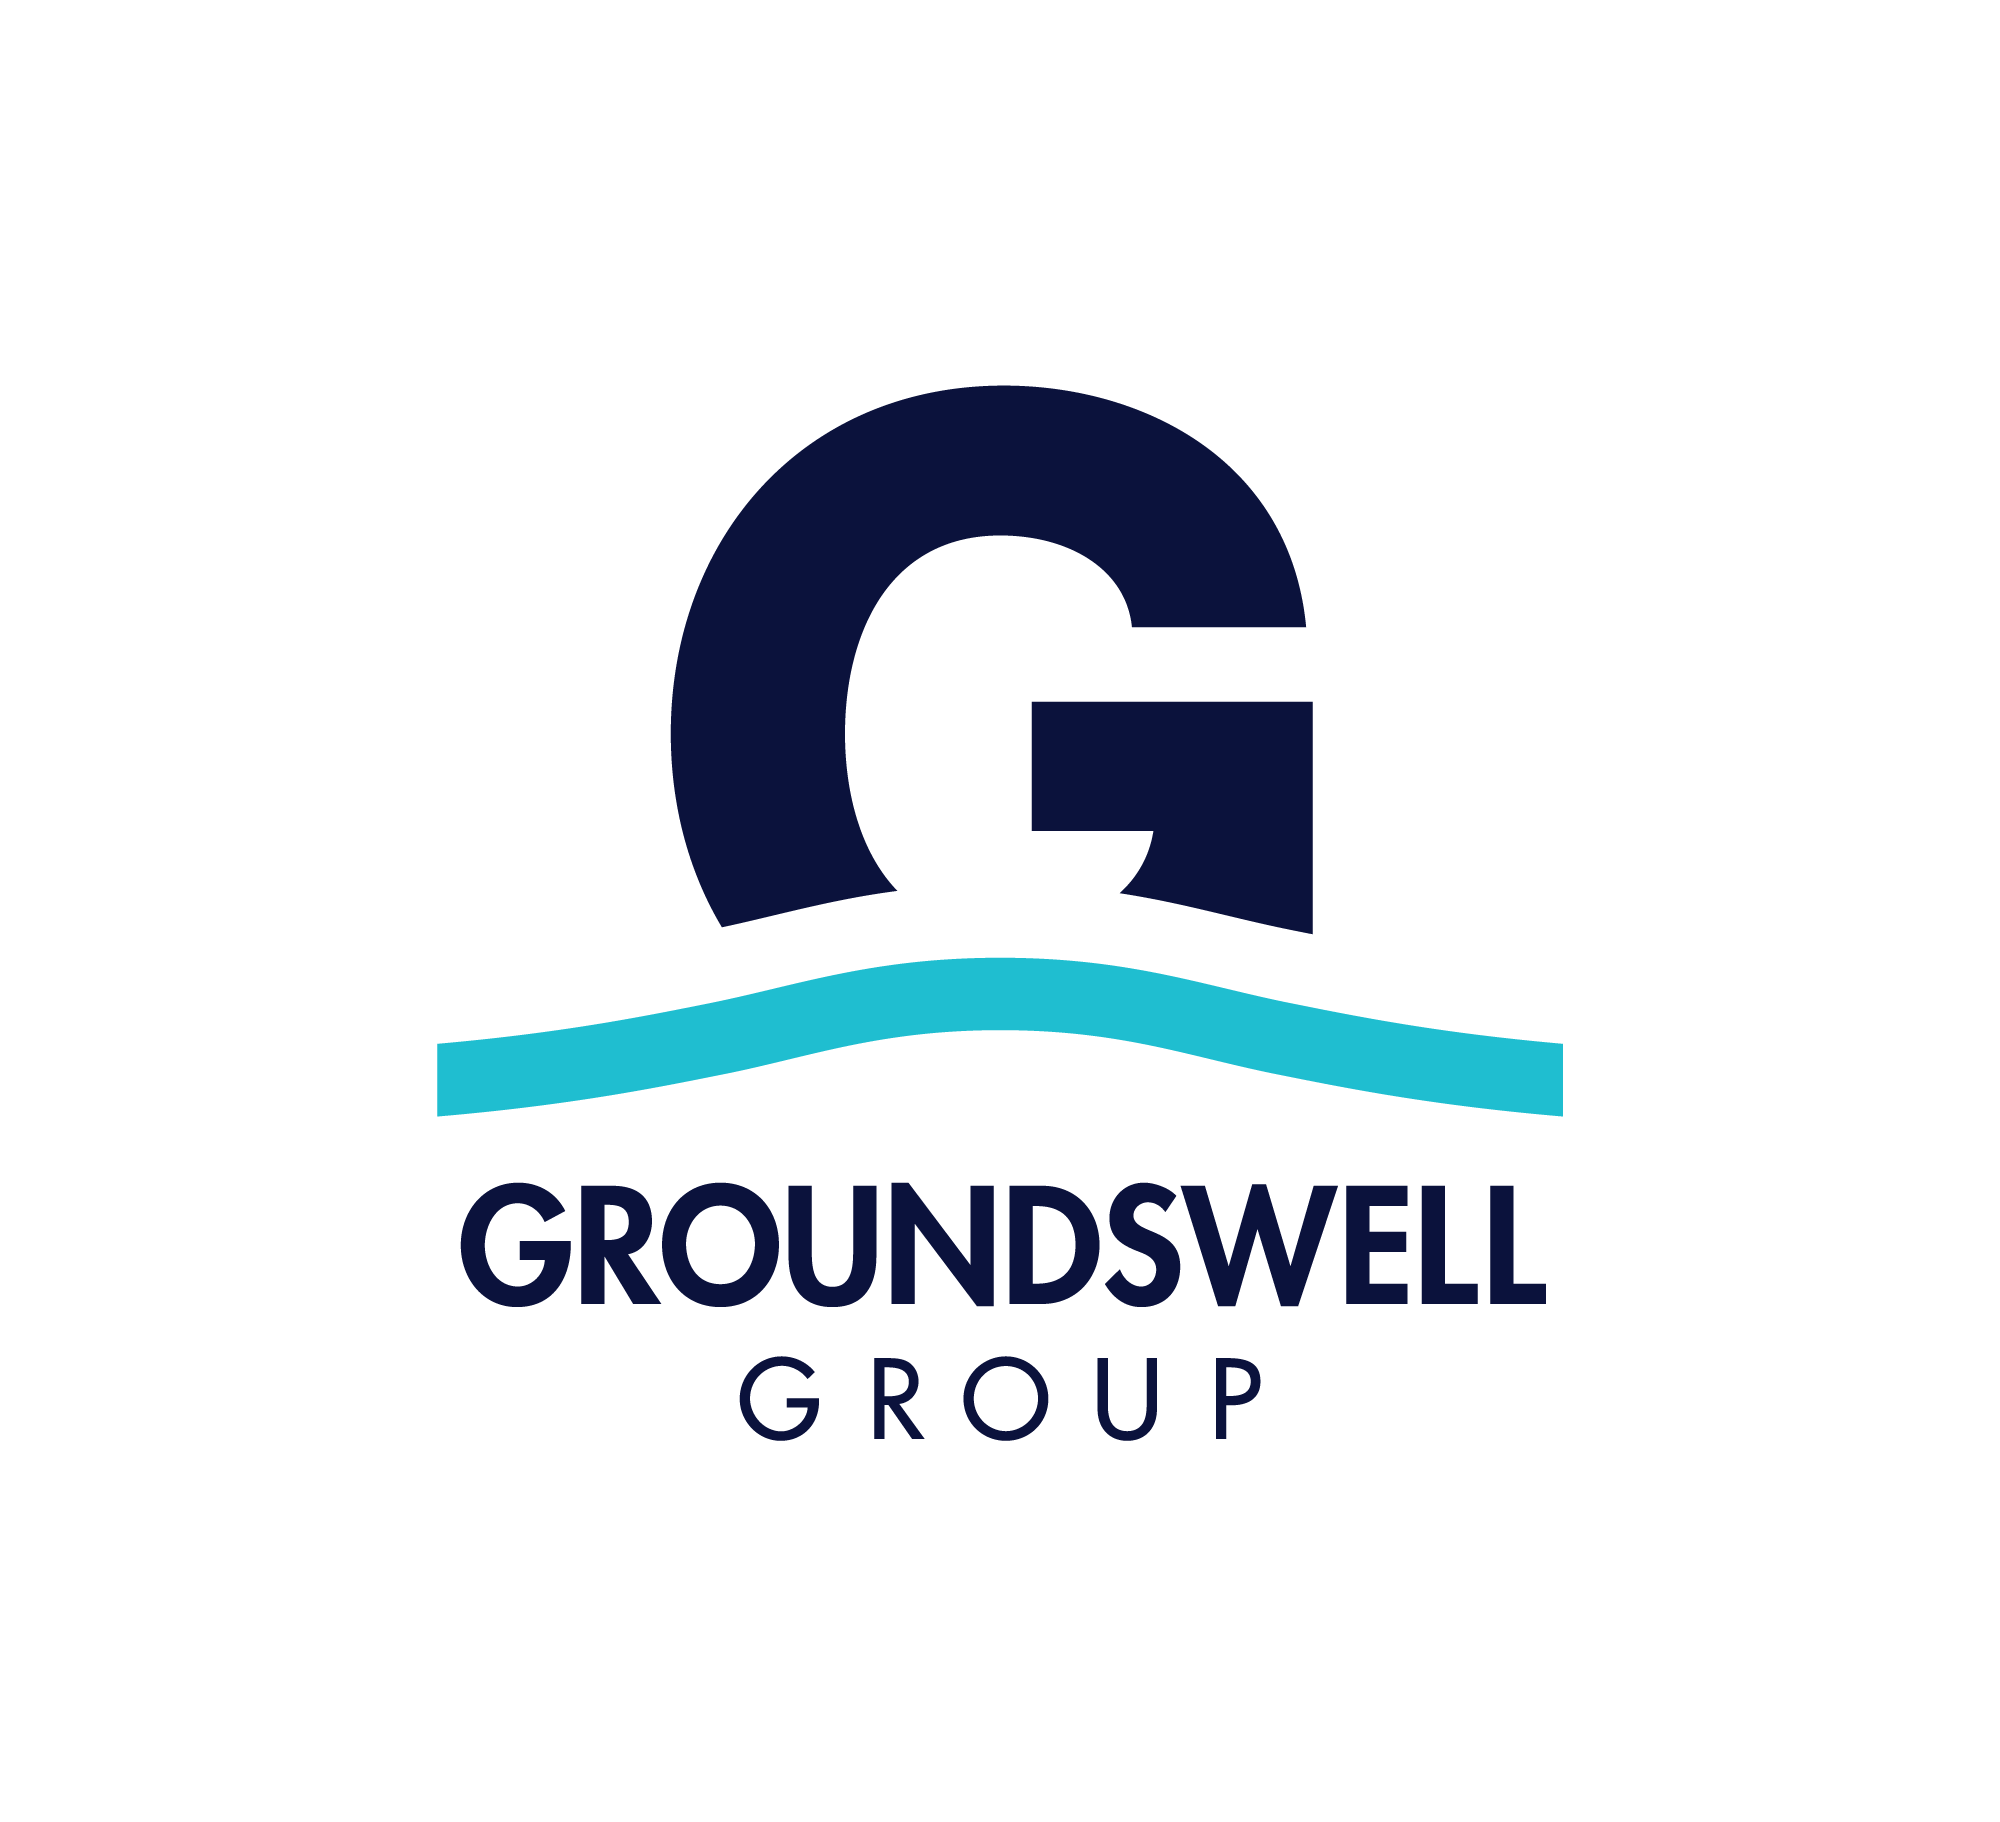 Groundswell Group